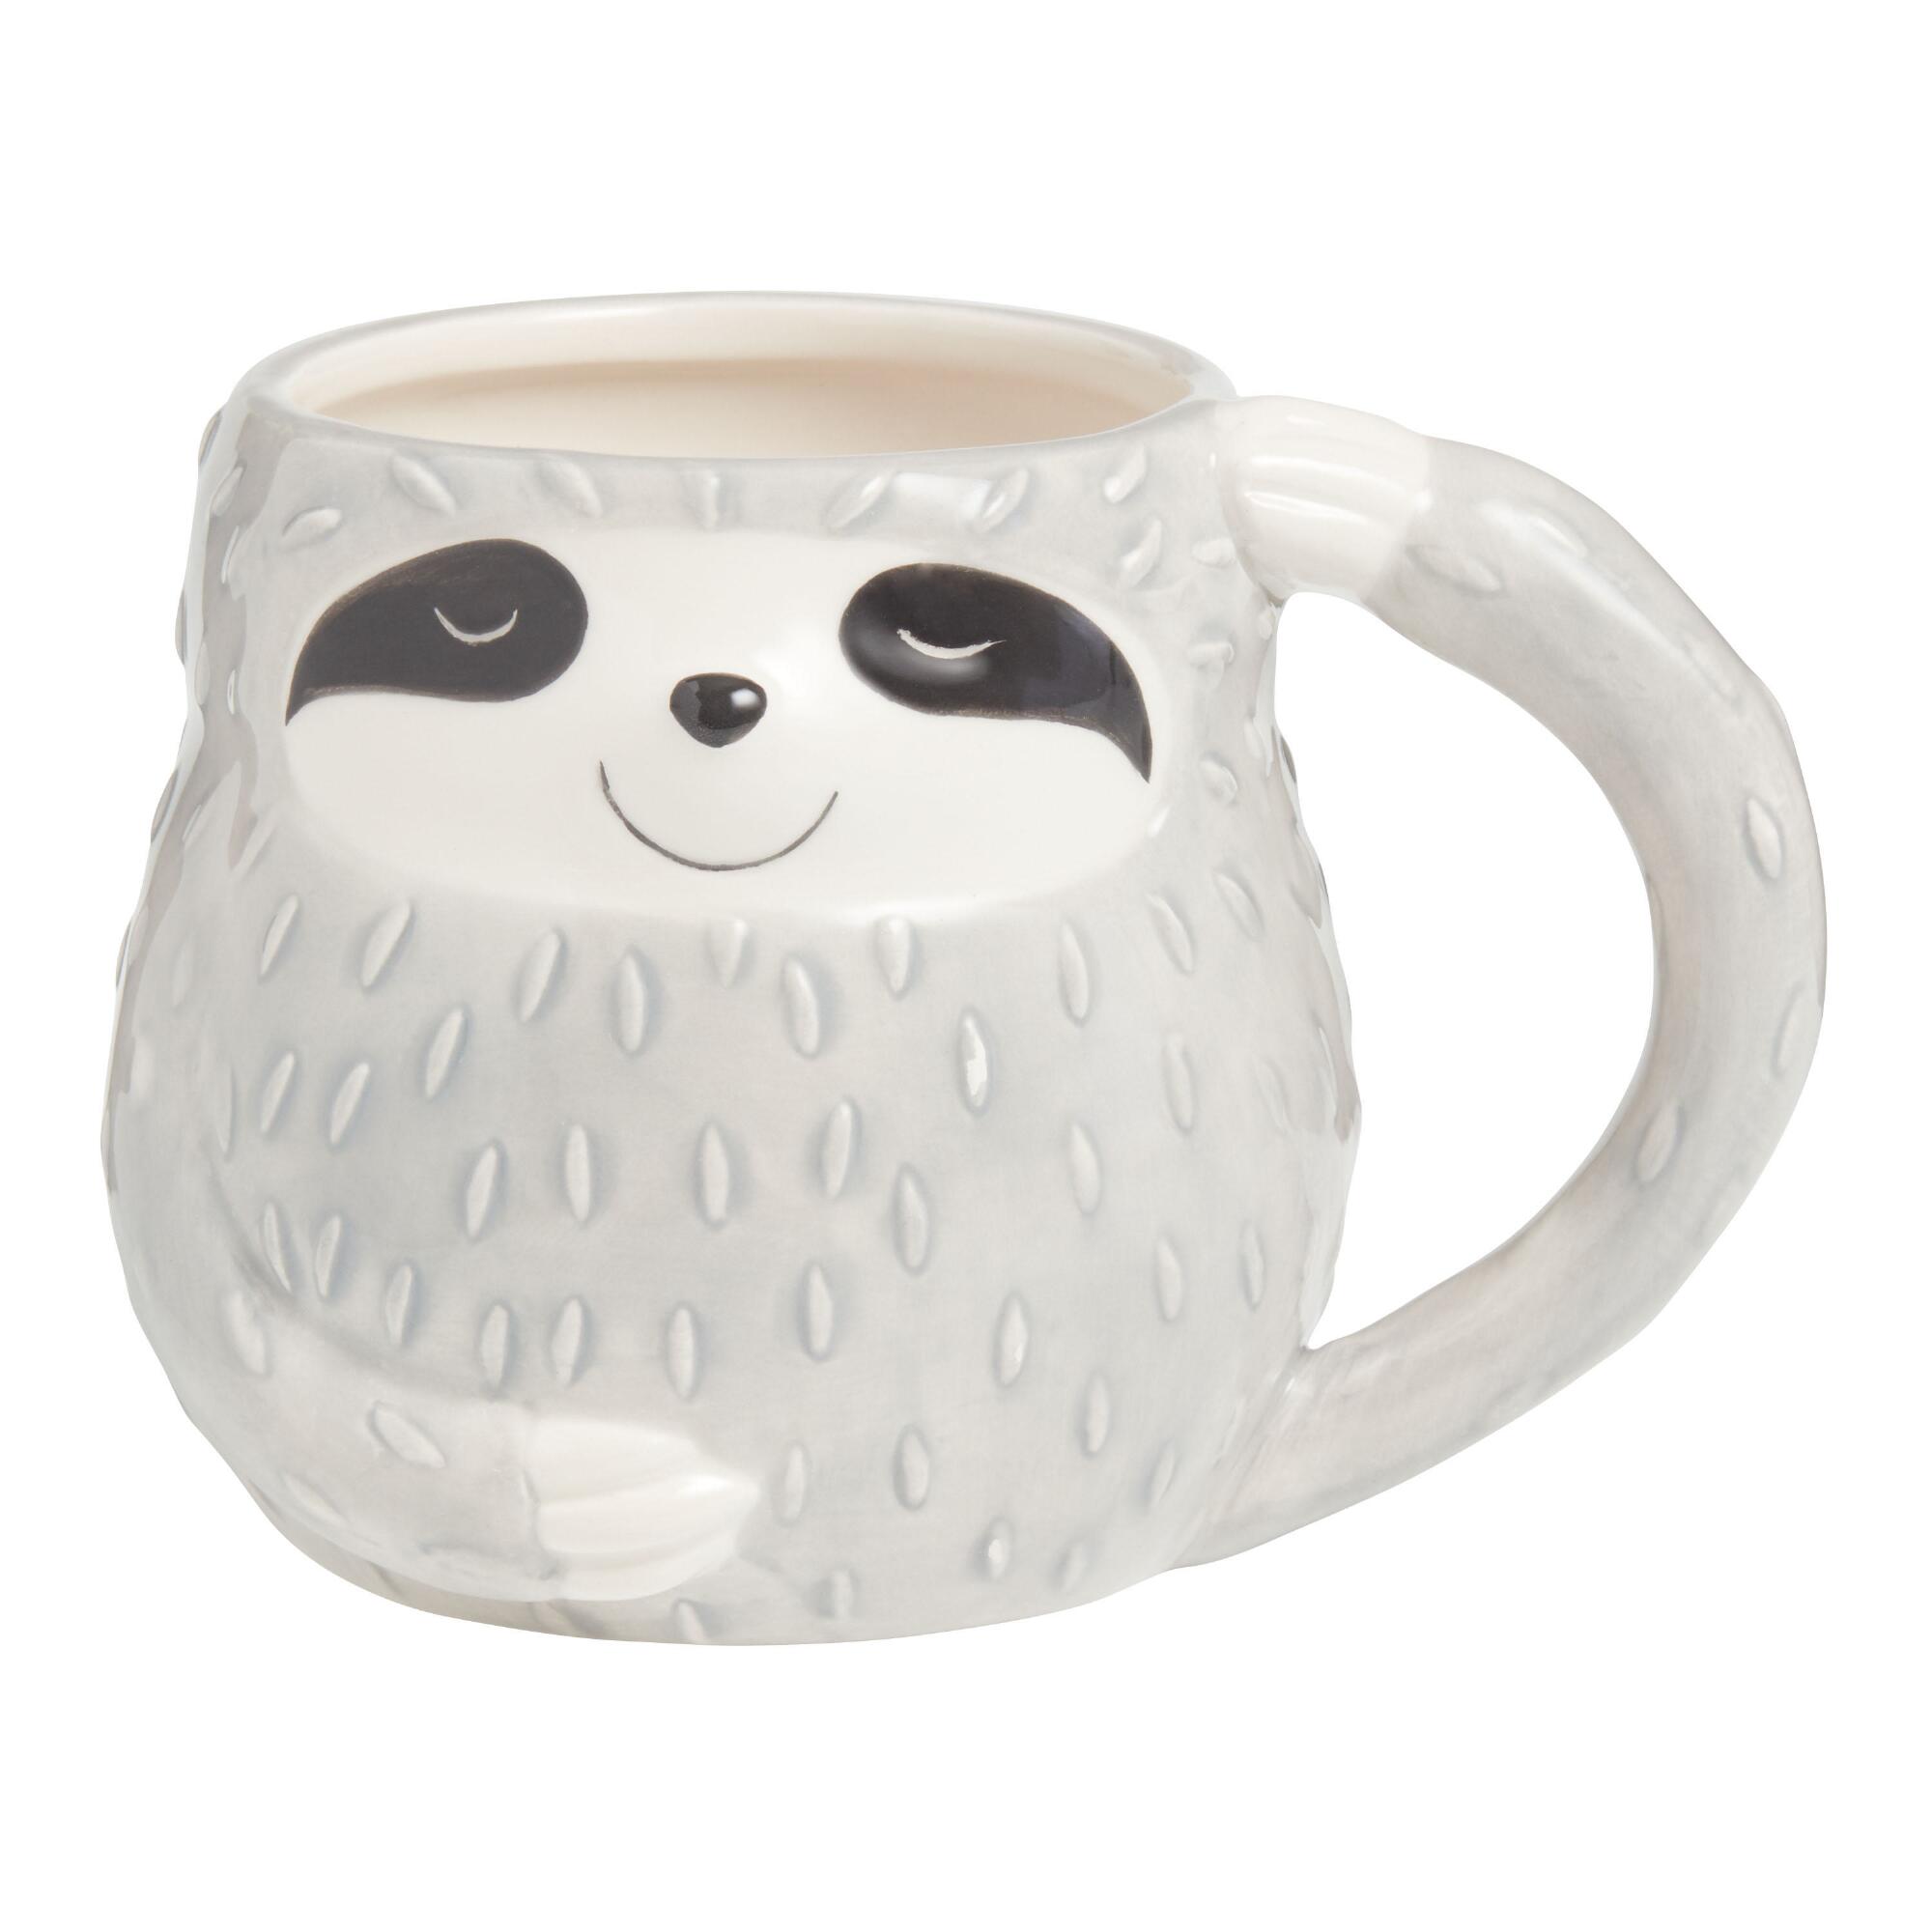 Gray and White Textured Sloth Mug by World Market